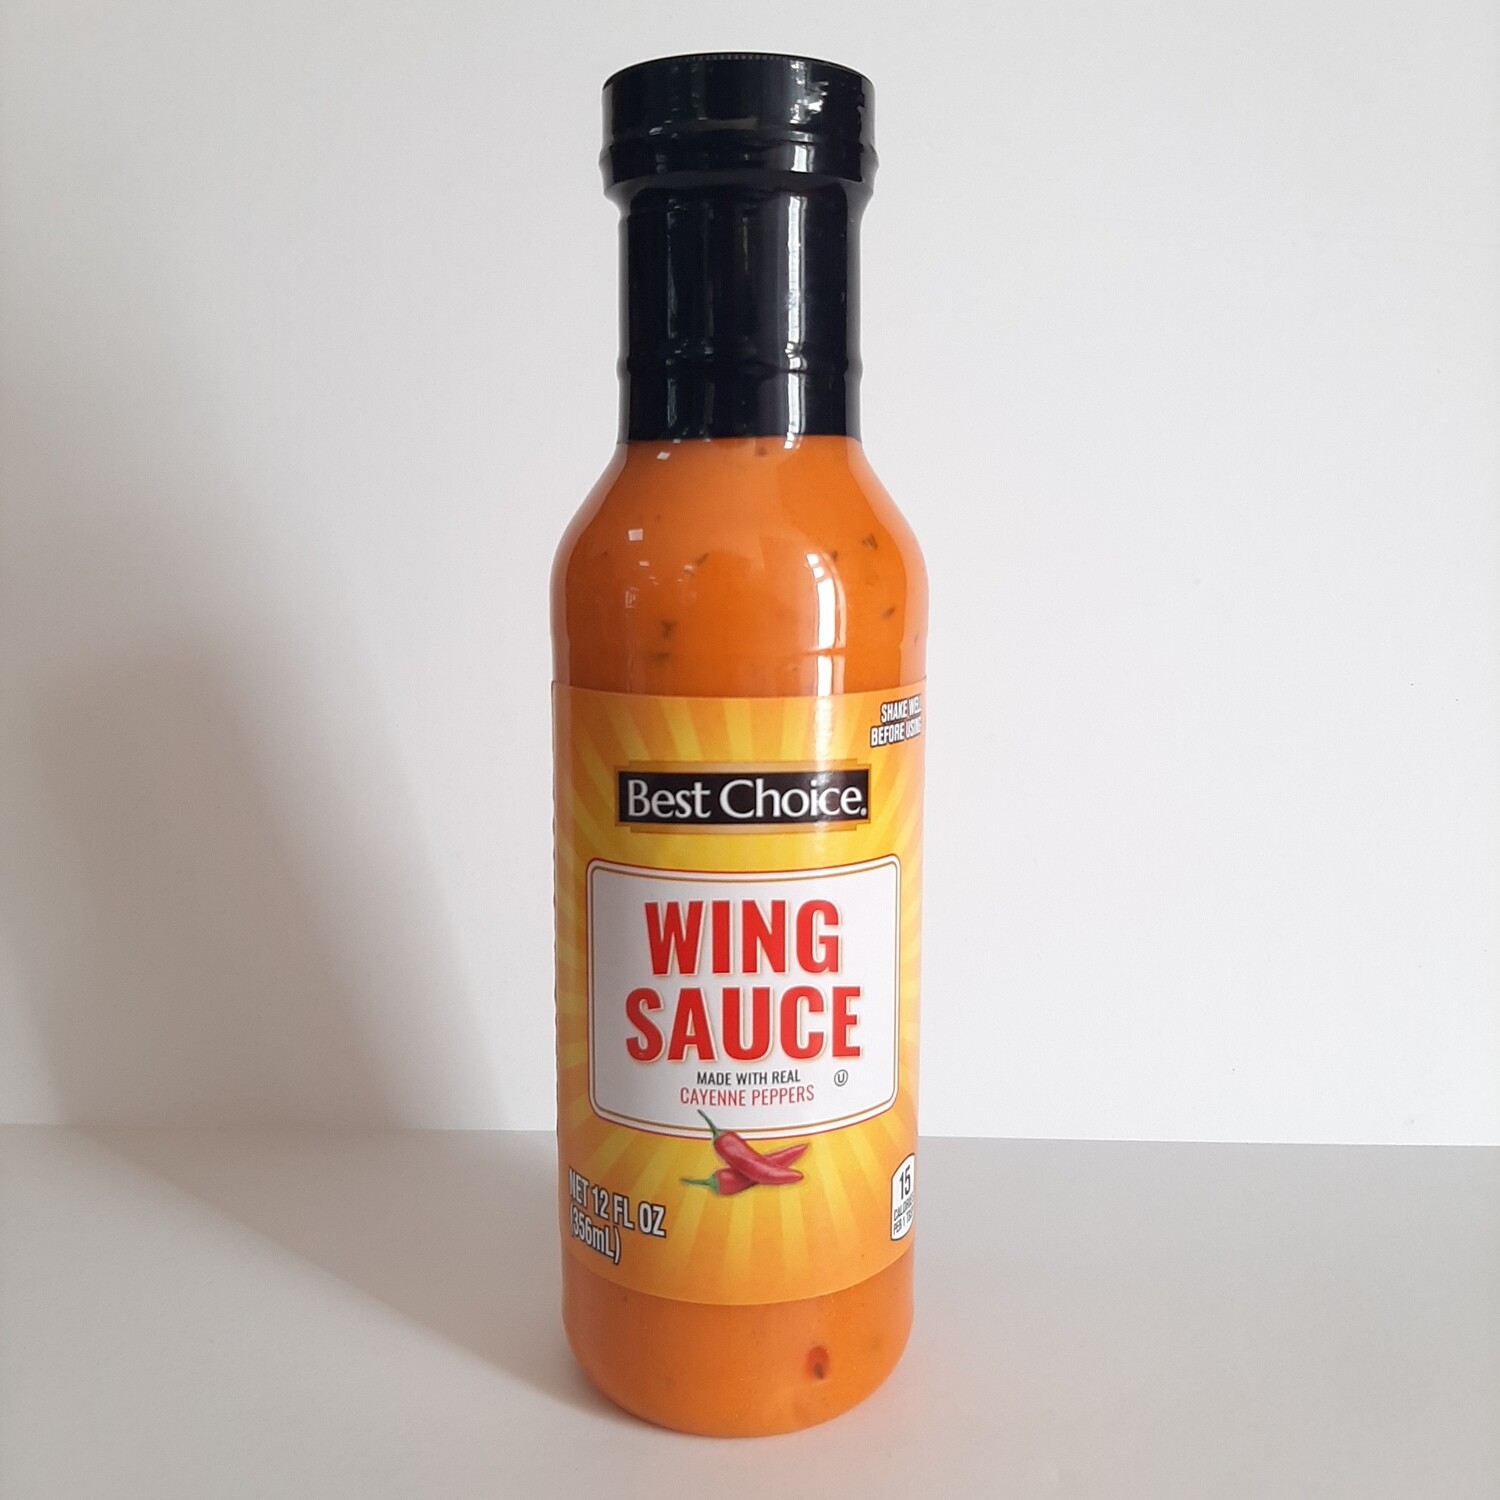 Best Choice Wing Sauce 12oz x 6